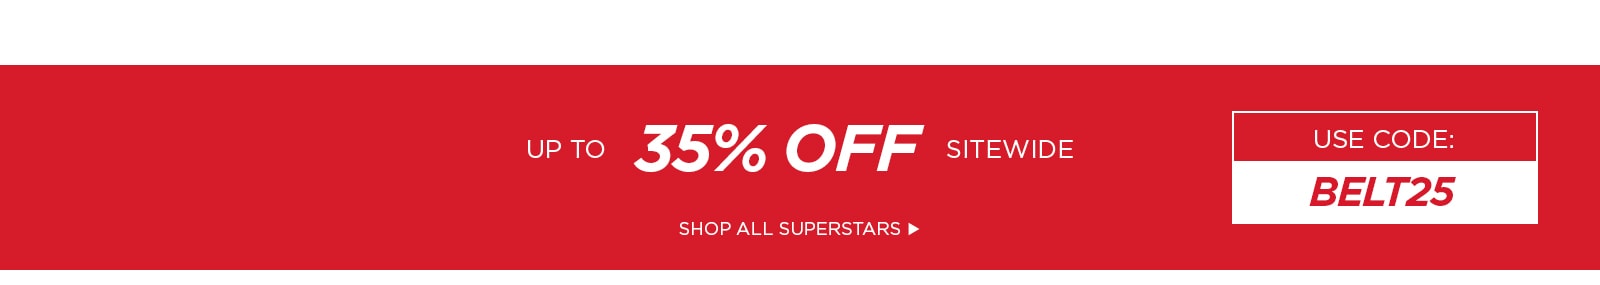 Up to 35% Off Sitewide Use Code BELT25 Shop All Superstars